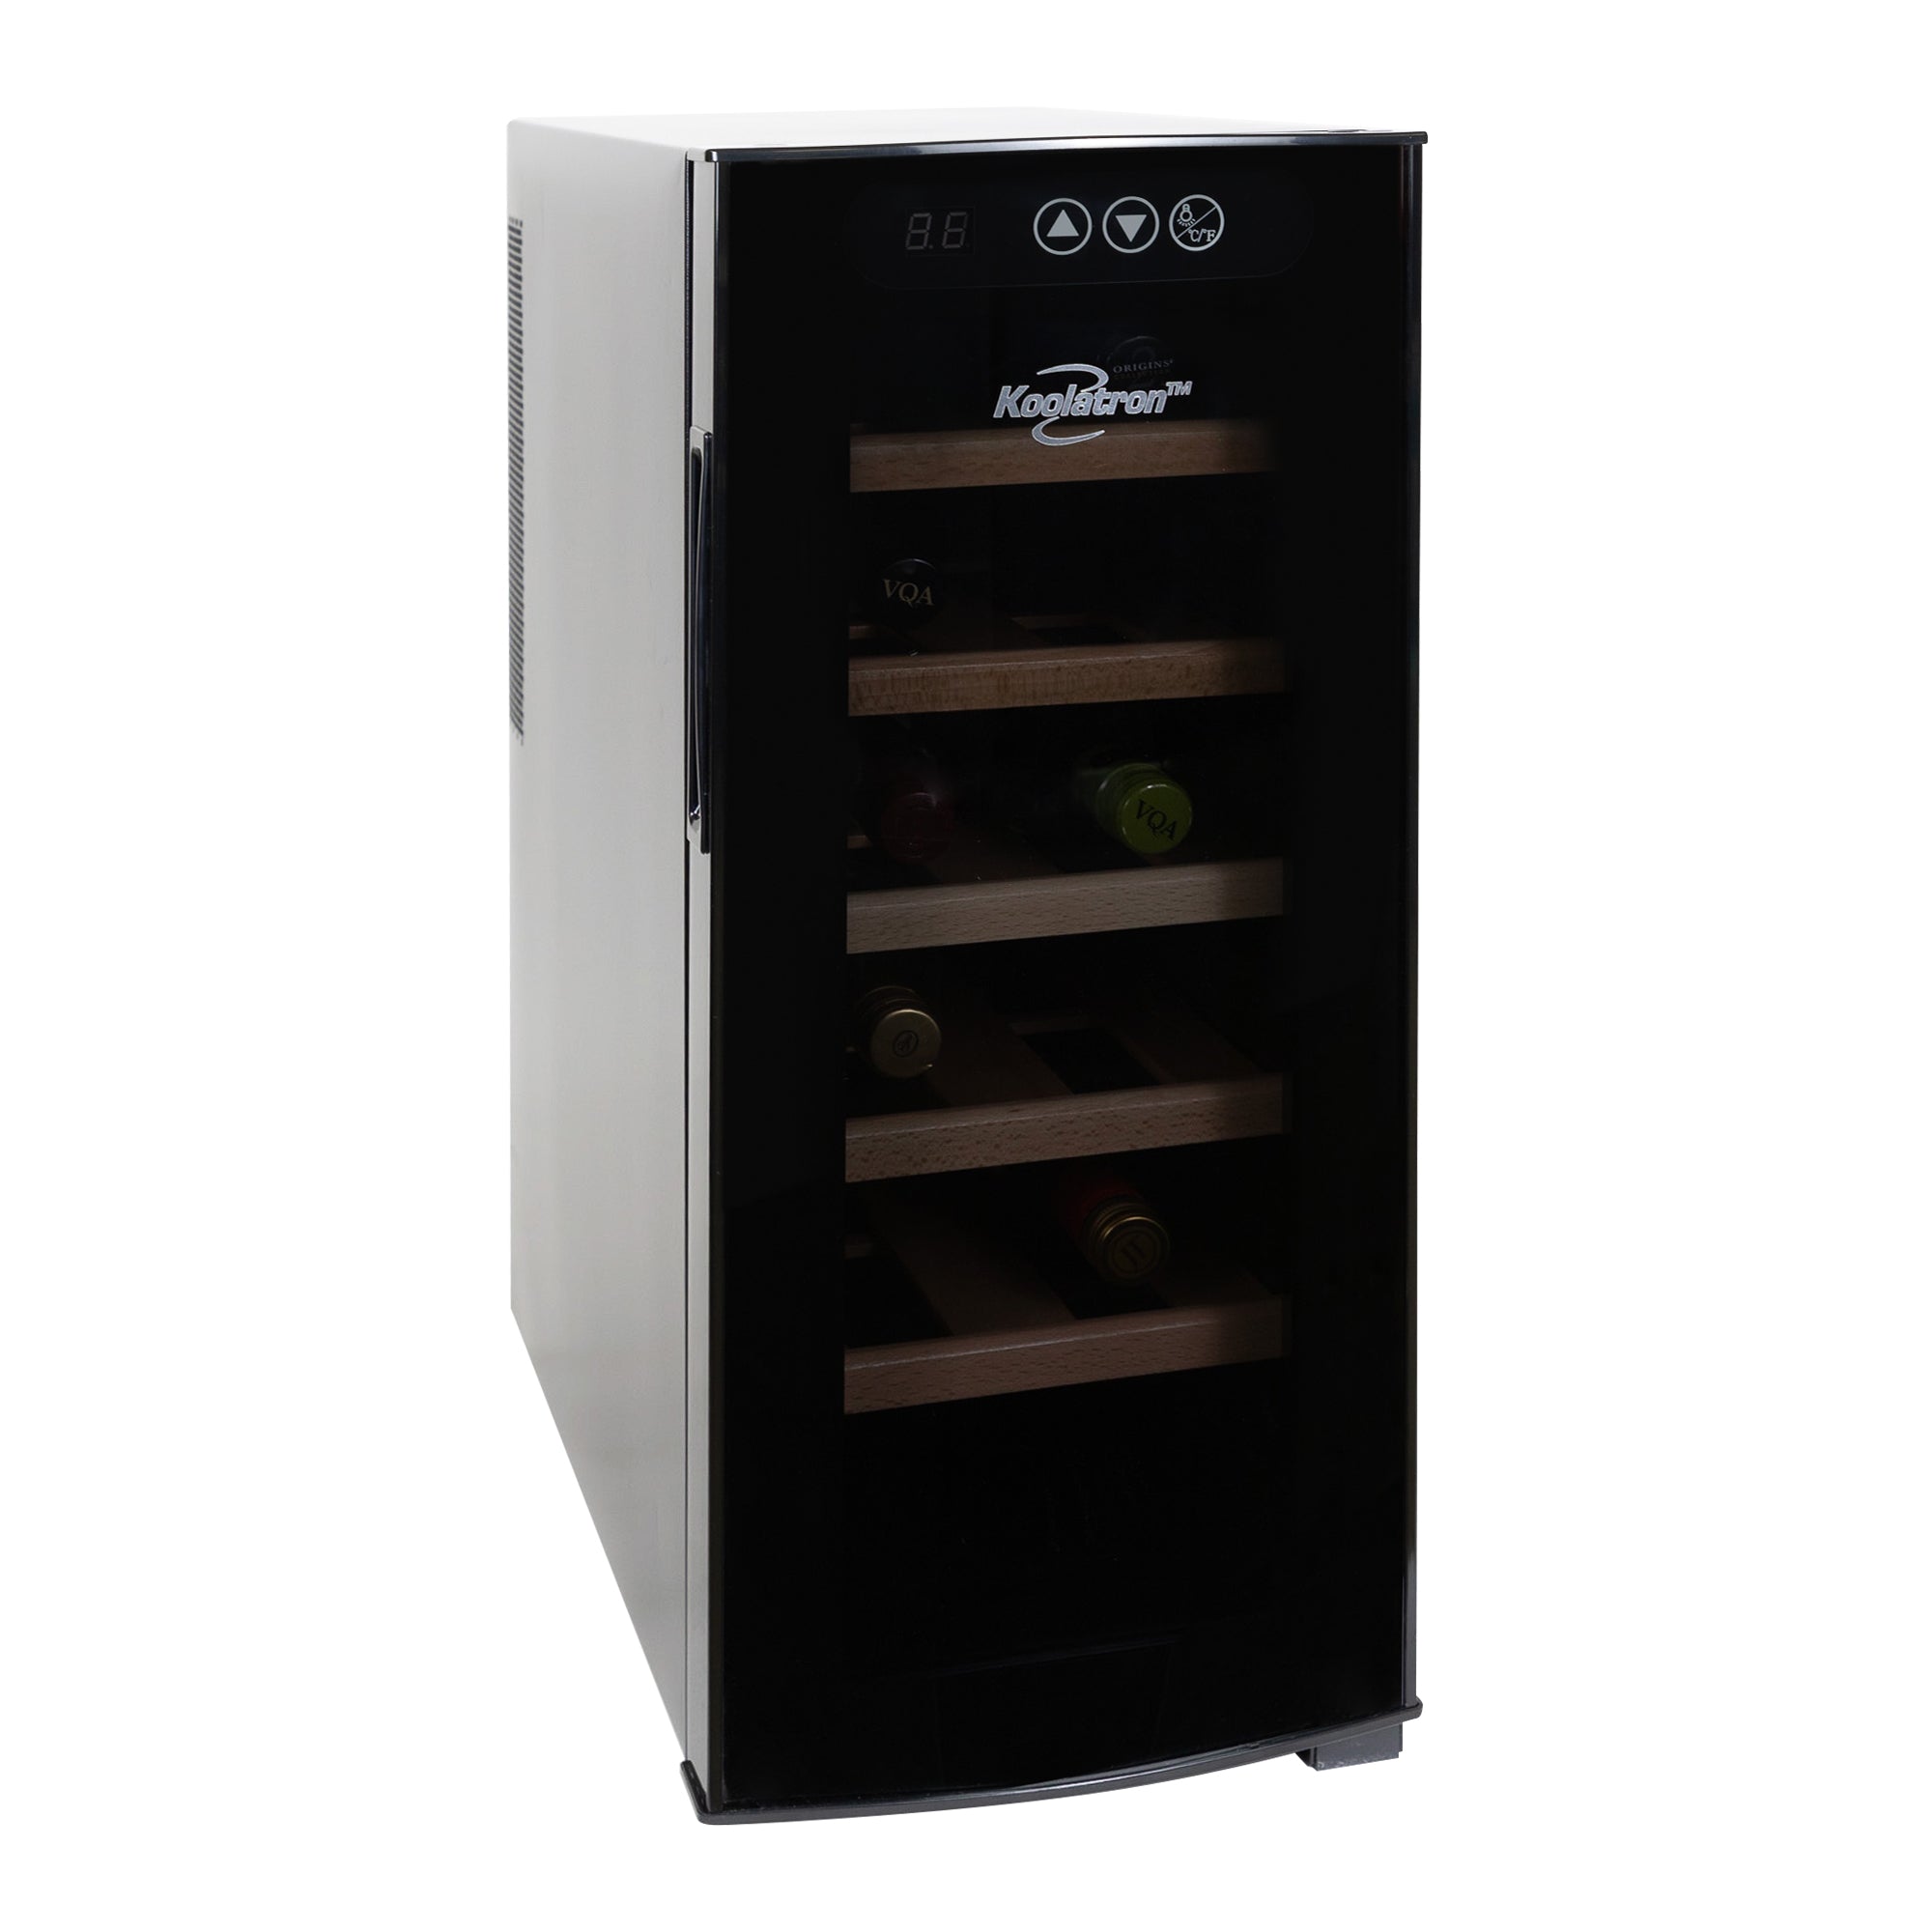 Kenmore Elite Dual Zone Wine Fridge, 111 Bottle Compressor Wine Cooler